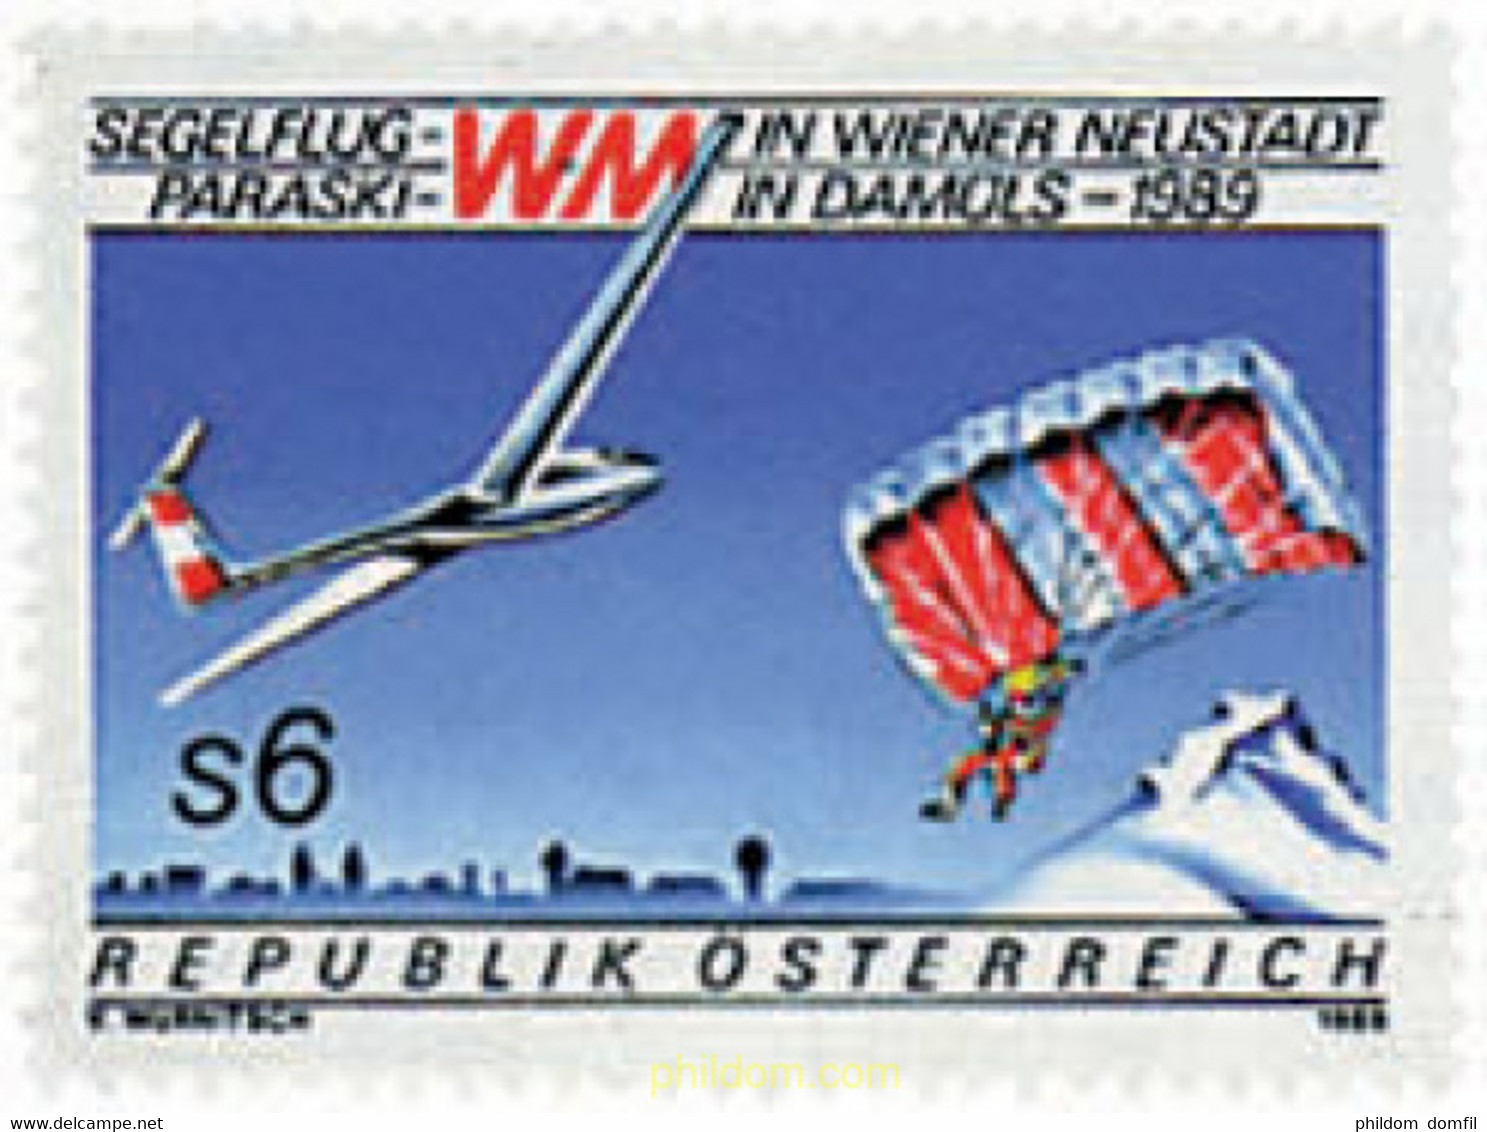 69212 MNH AUSTRIA 1989 CAMPEONATOS DEL MUNDO DE VUELO A VELA Y PARACAIDISMO - Fallschirmspringen